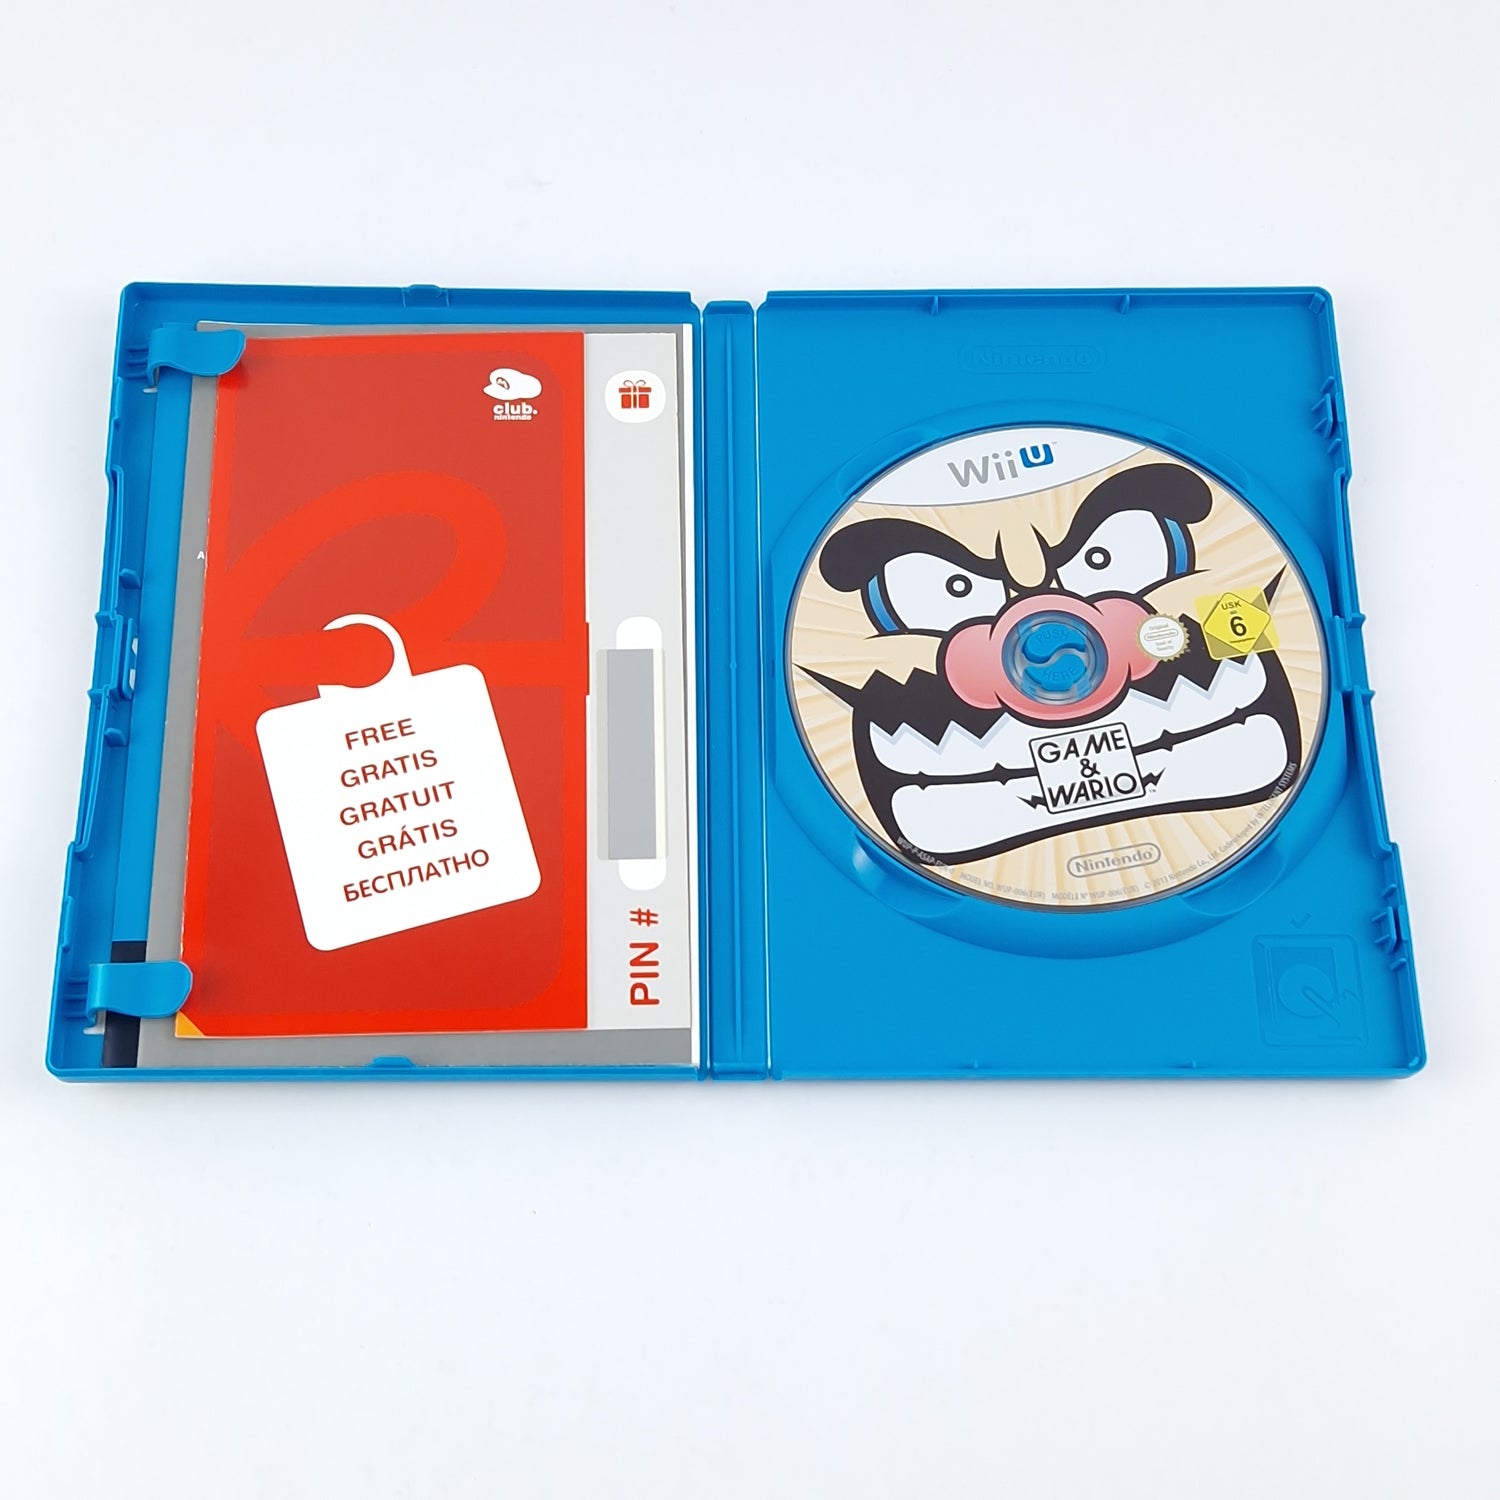 Nintendo Wii U Game: Game & Wario - OVP Instructions CD | PAL